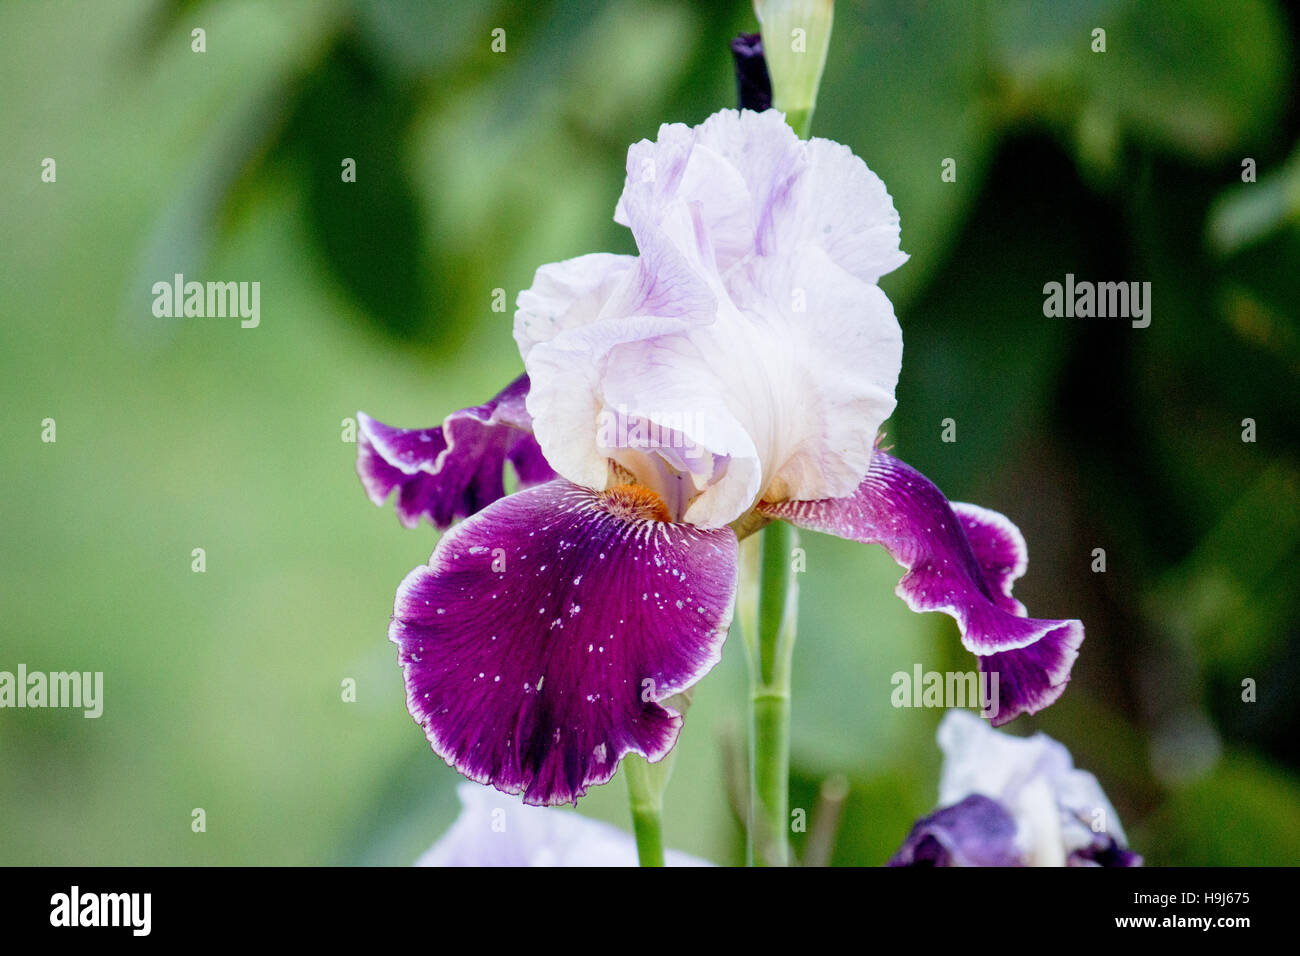 White and violet bearded Iris Stock Photo